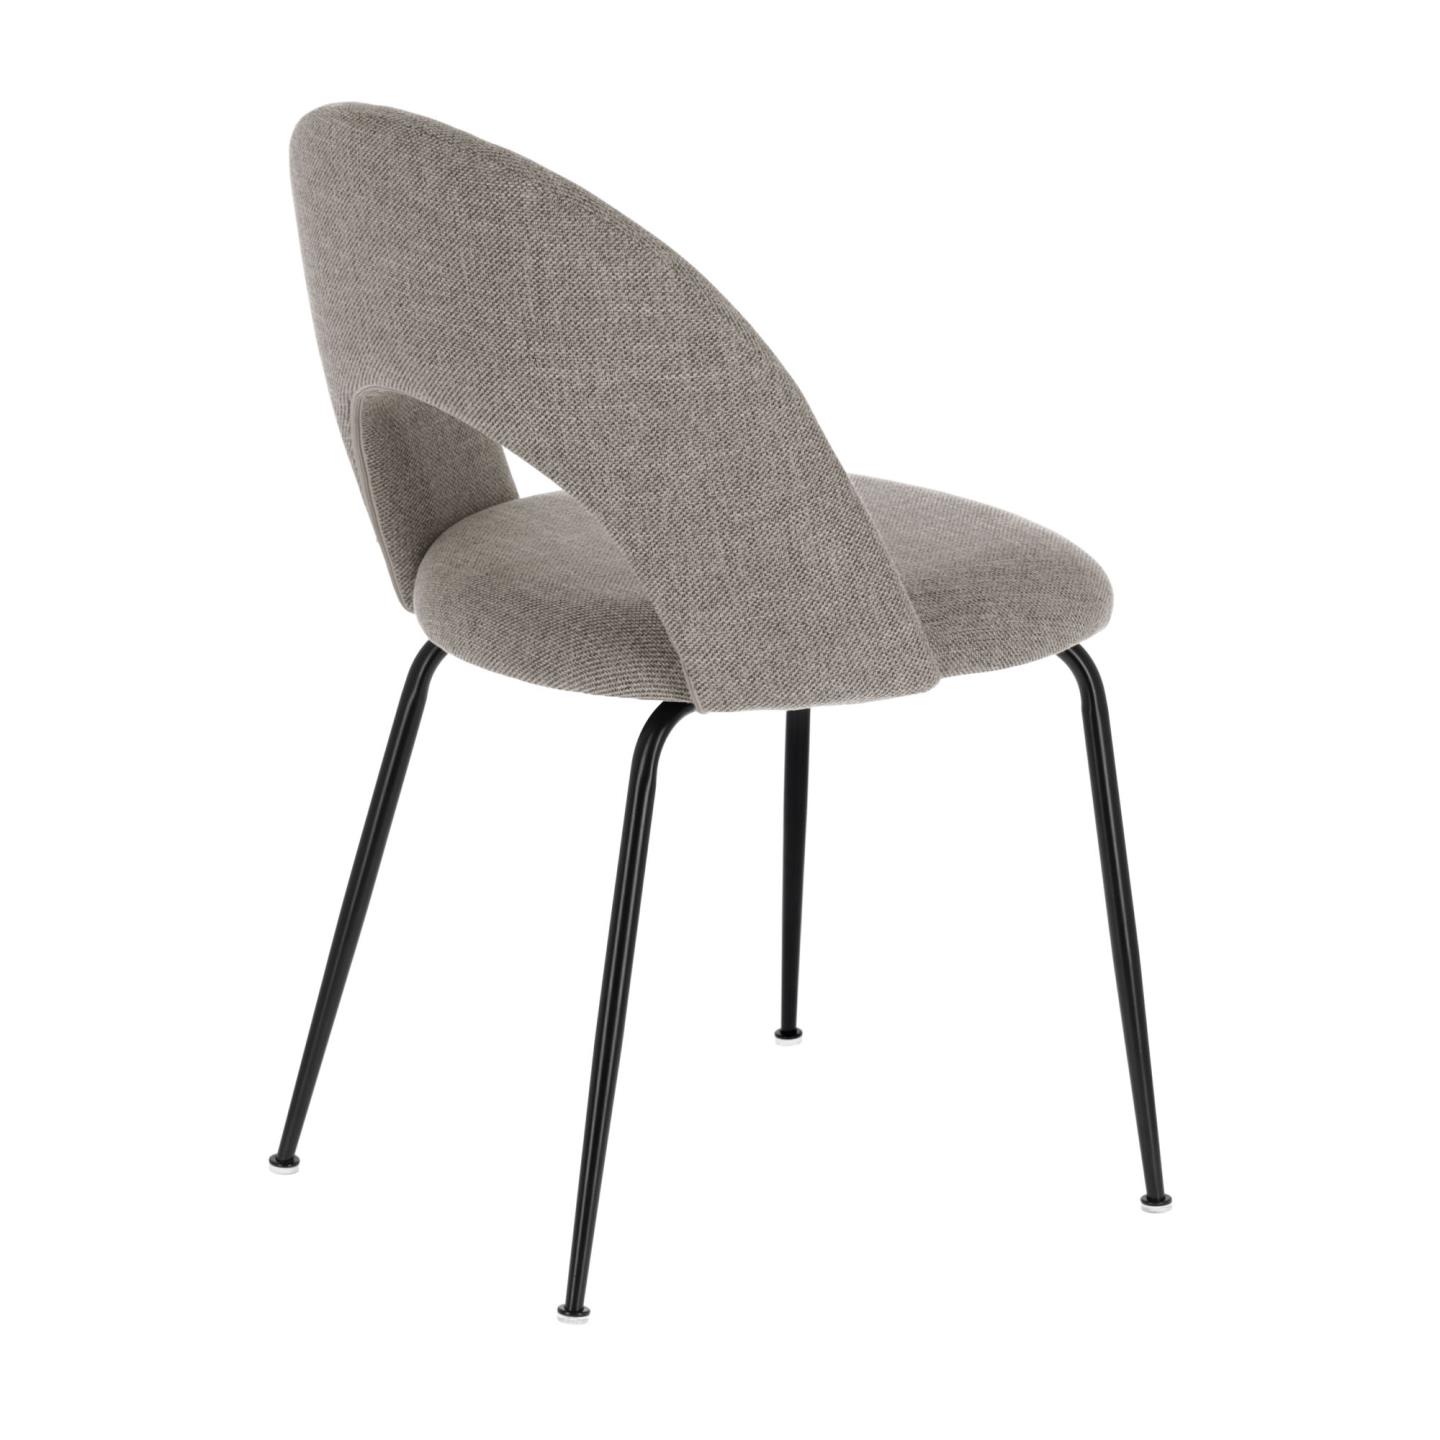 Mahalia light grey chair